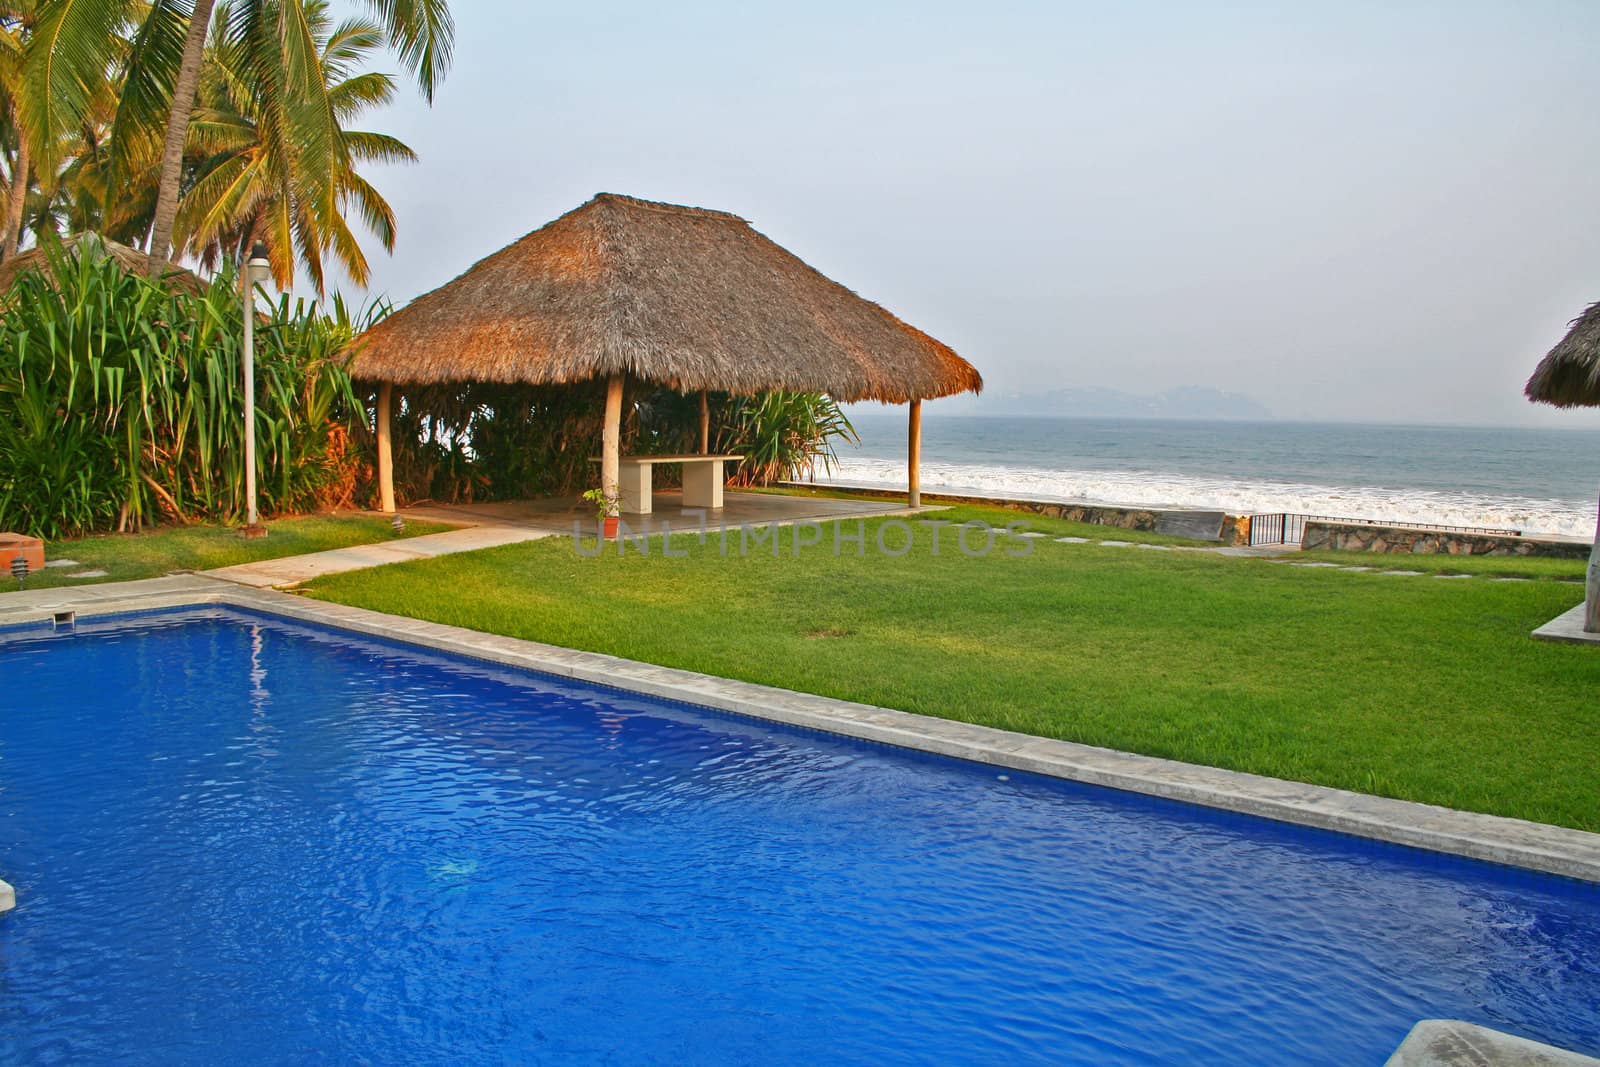 Luxury tropical pool overlooking ocean and cabana